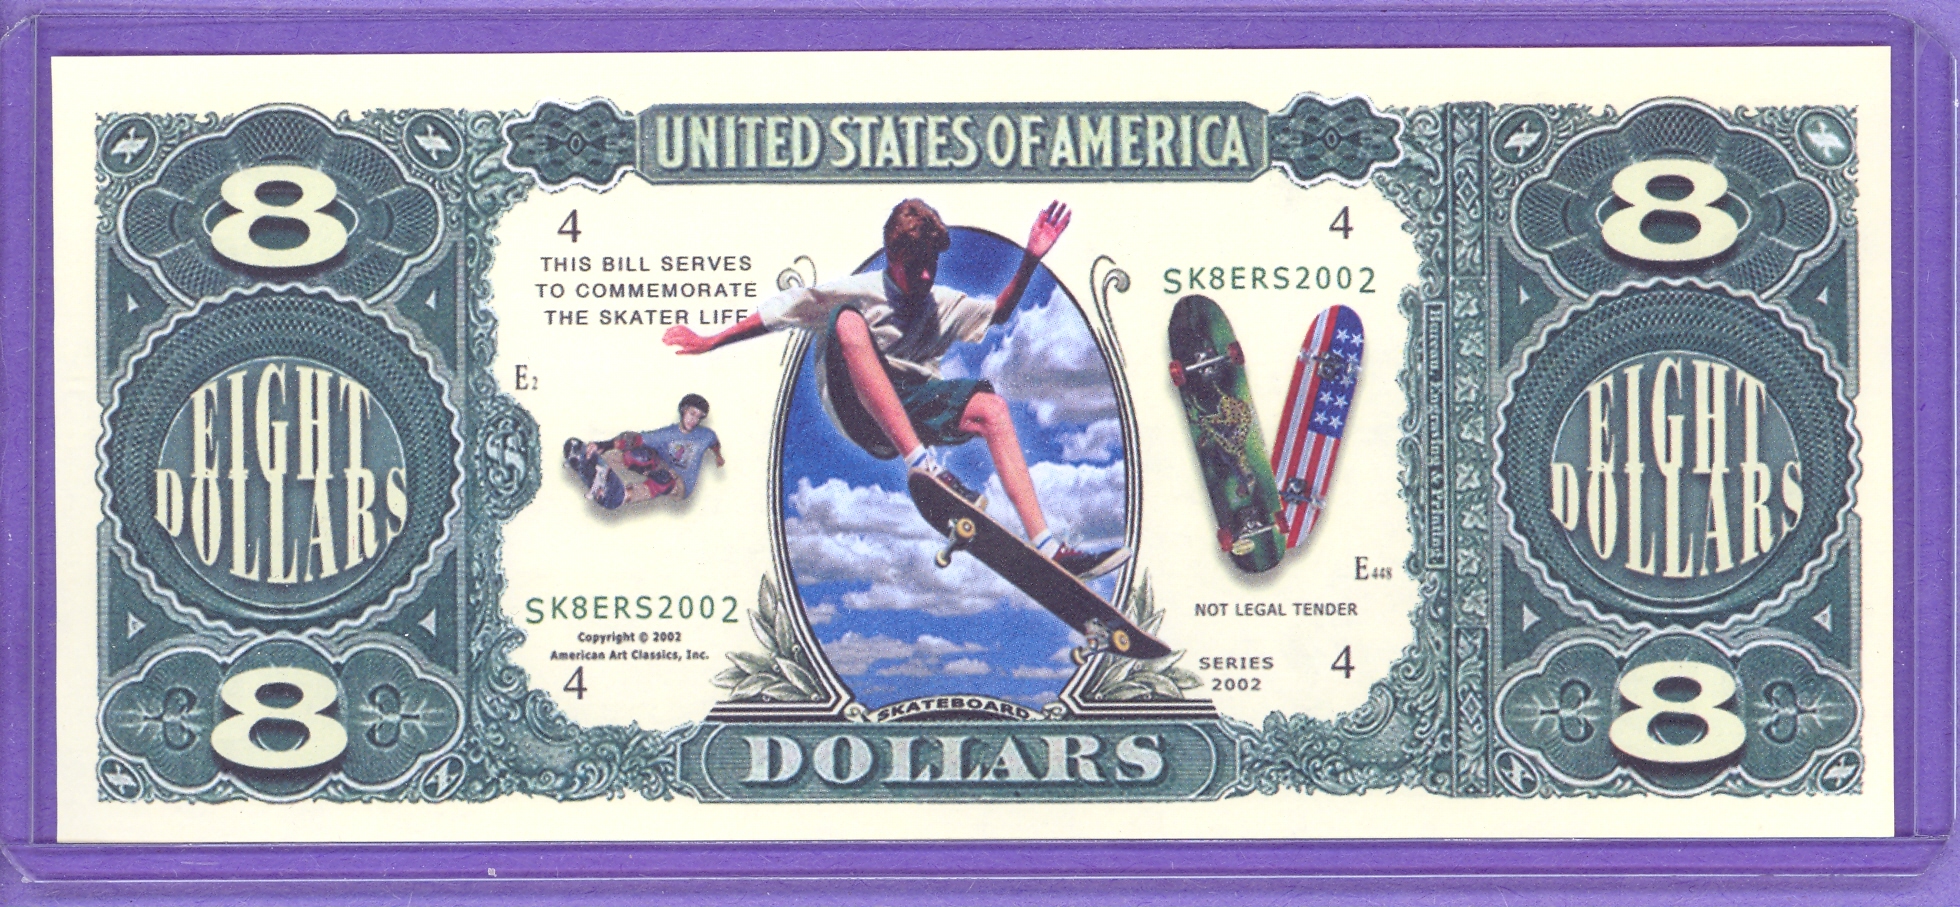 Skateboarders $8 Fantasy Note